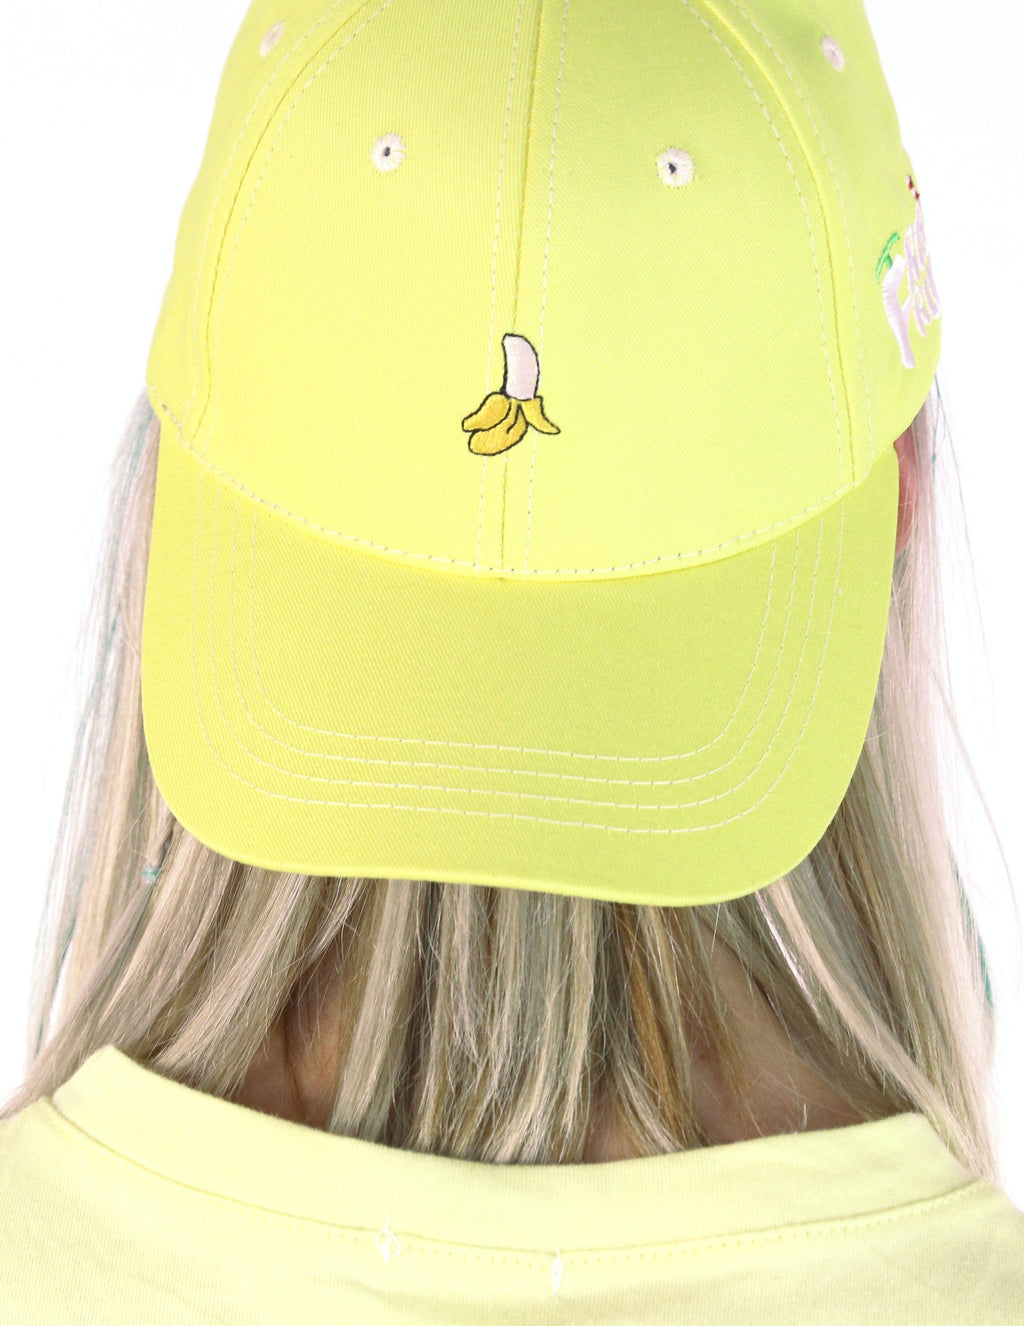 Banana Baseball Cap boogzel apparel